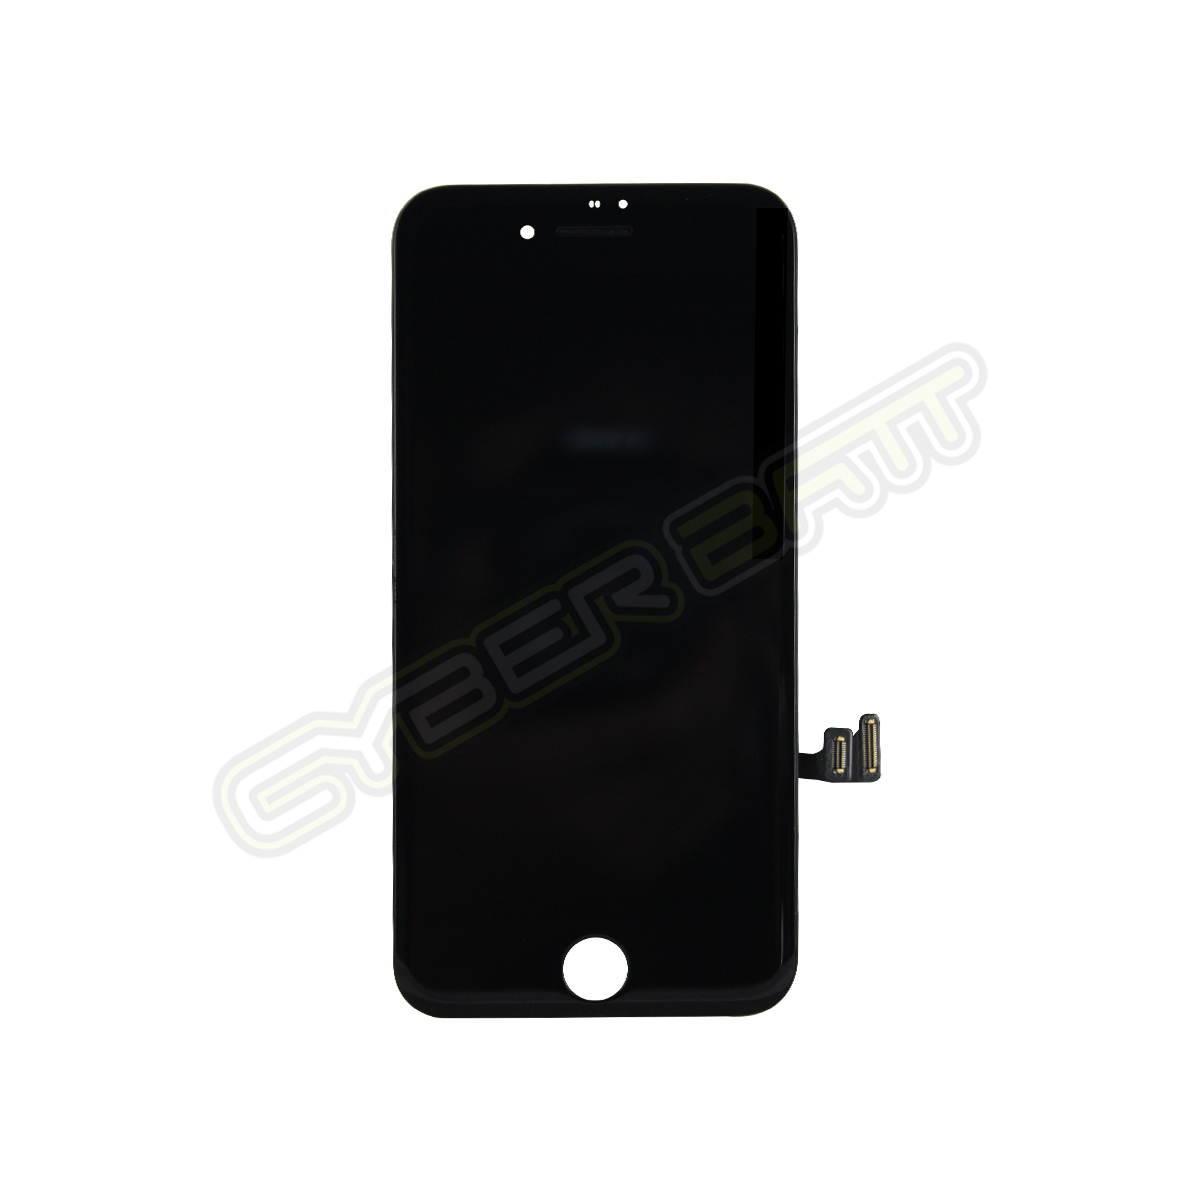 iPhone 7 LCD Black หน้าจอไอโฟน 7 สีดำ